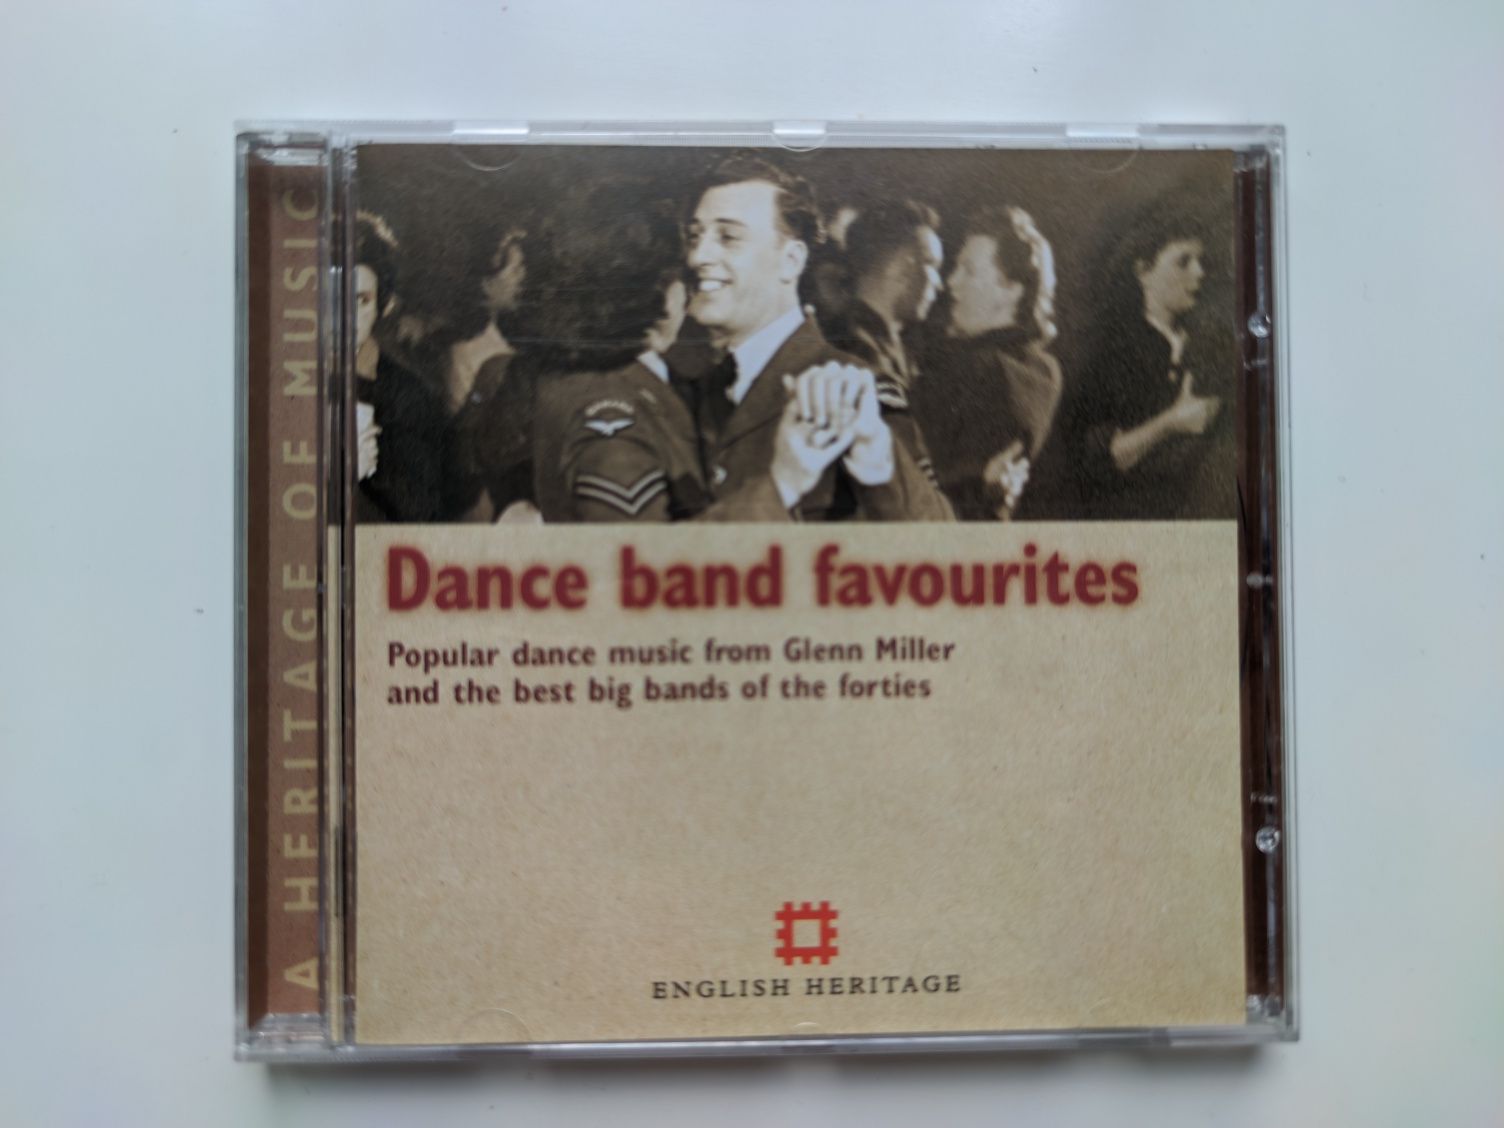 Фирменный CD Dance Band Favourites
Glenn Miller Frank Sinatra